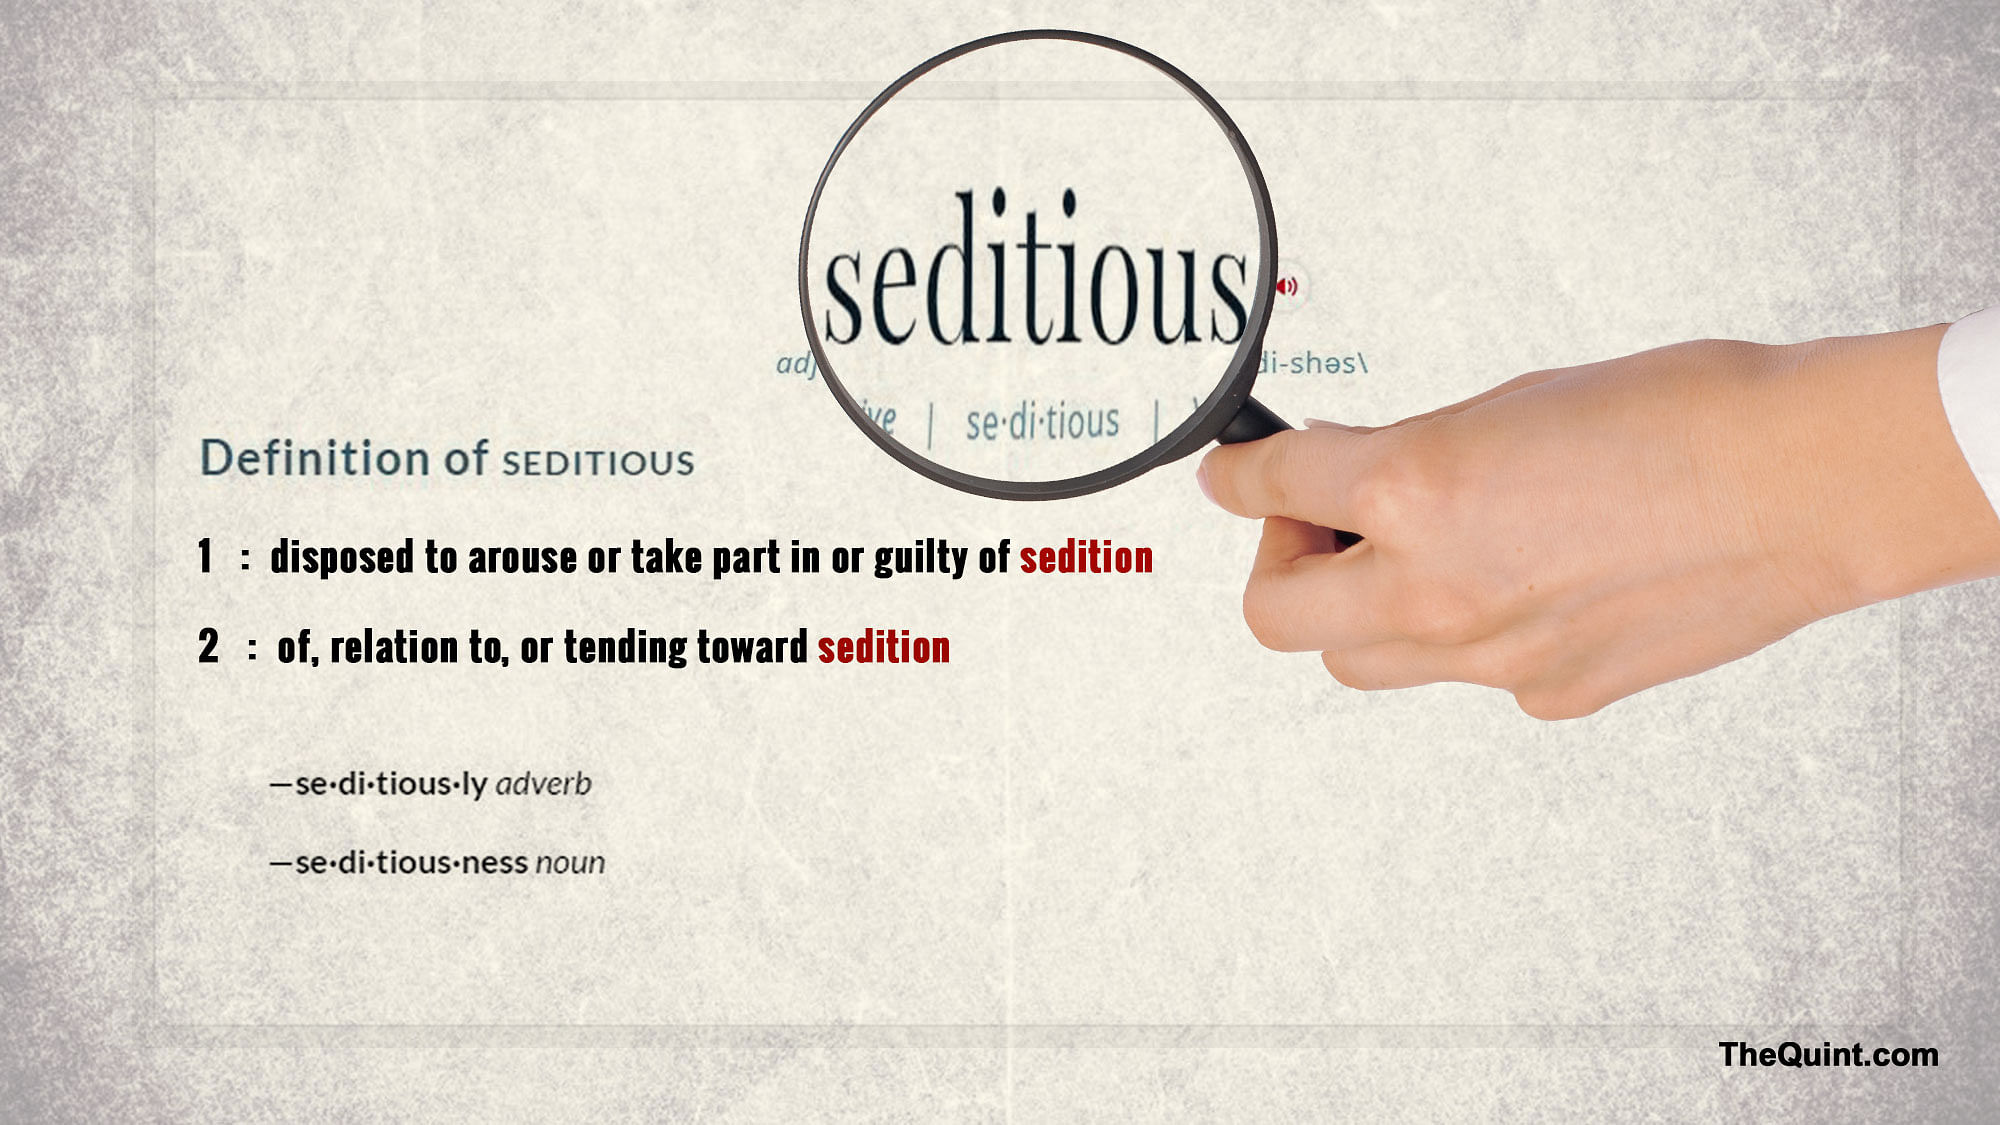 Seditious Material